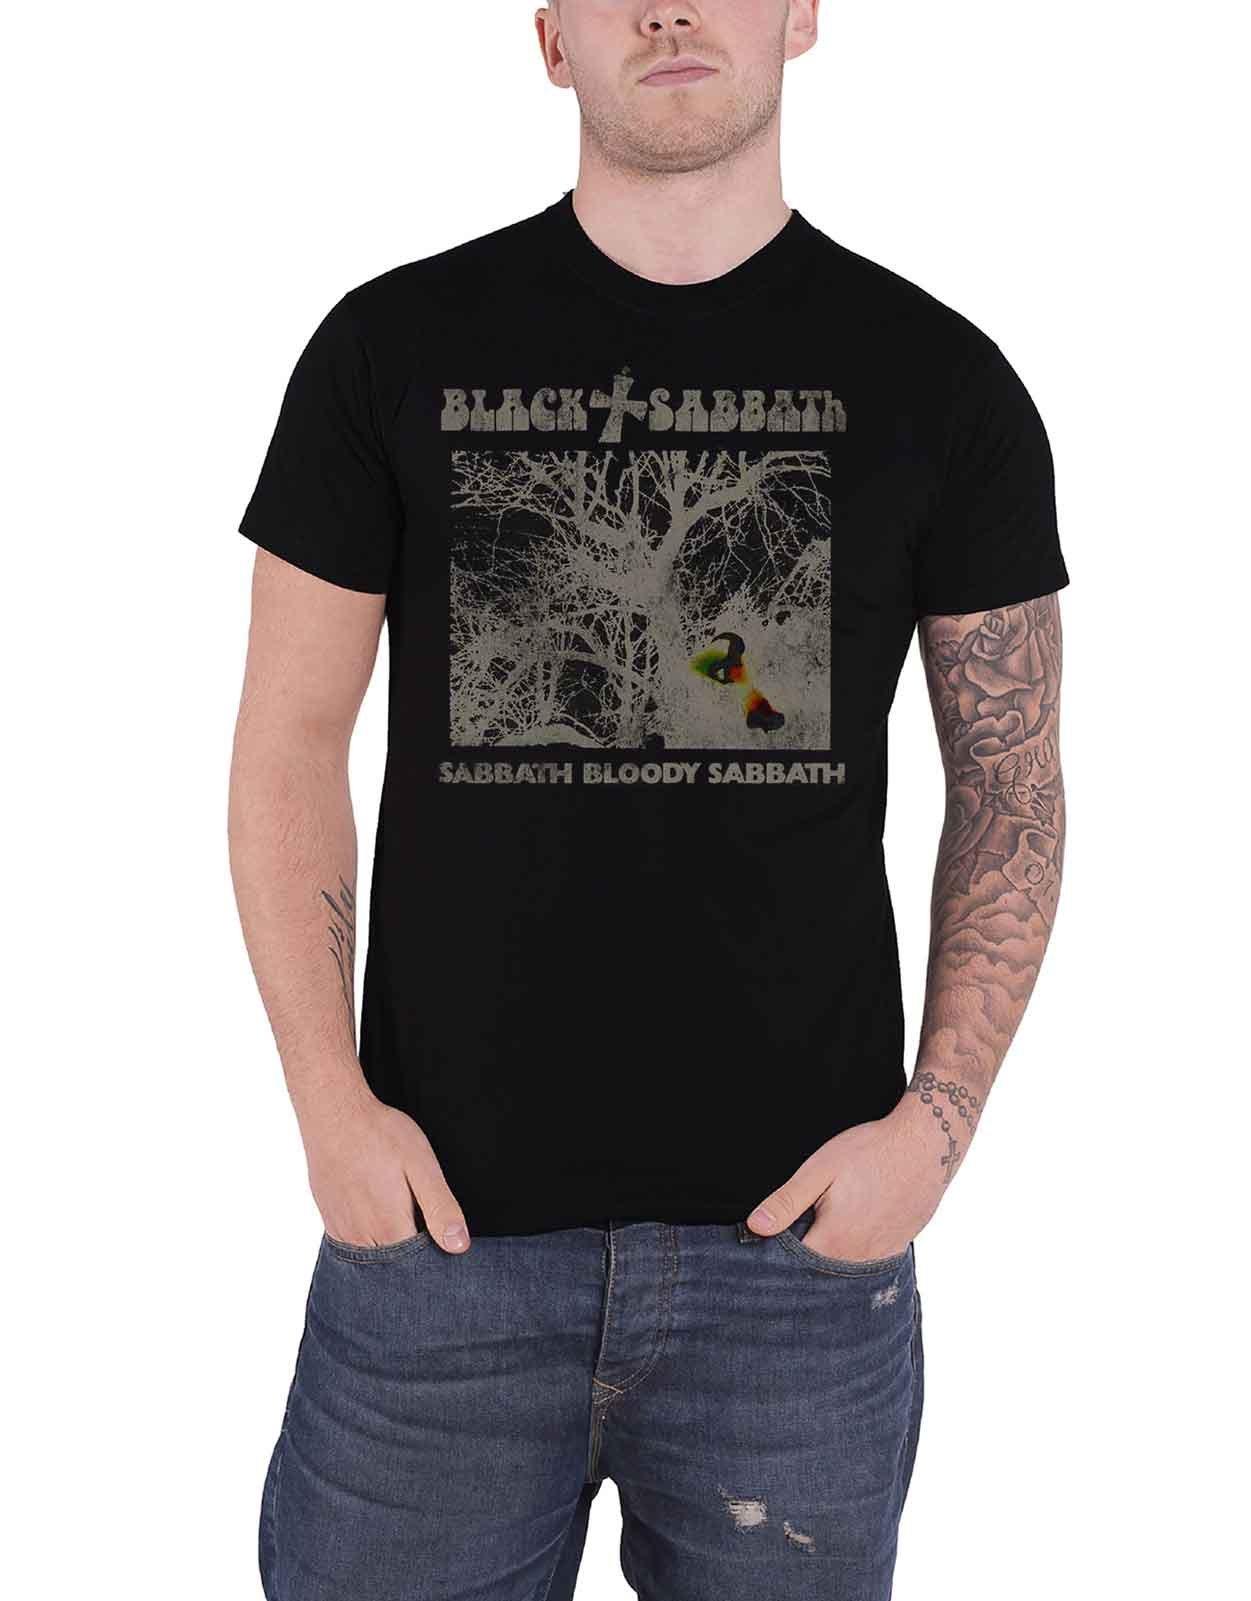 Винтажная футболка Sabbath Bloody Sabbath Black Sabbath, черный винил 12 lp black sabbath sabbath bloody sabbath